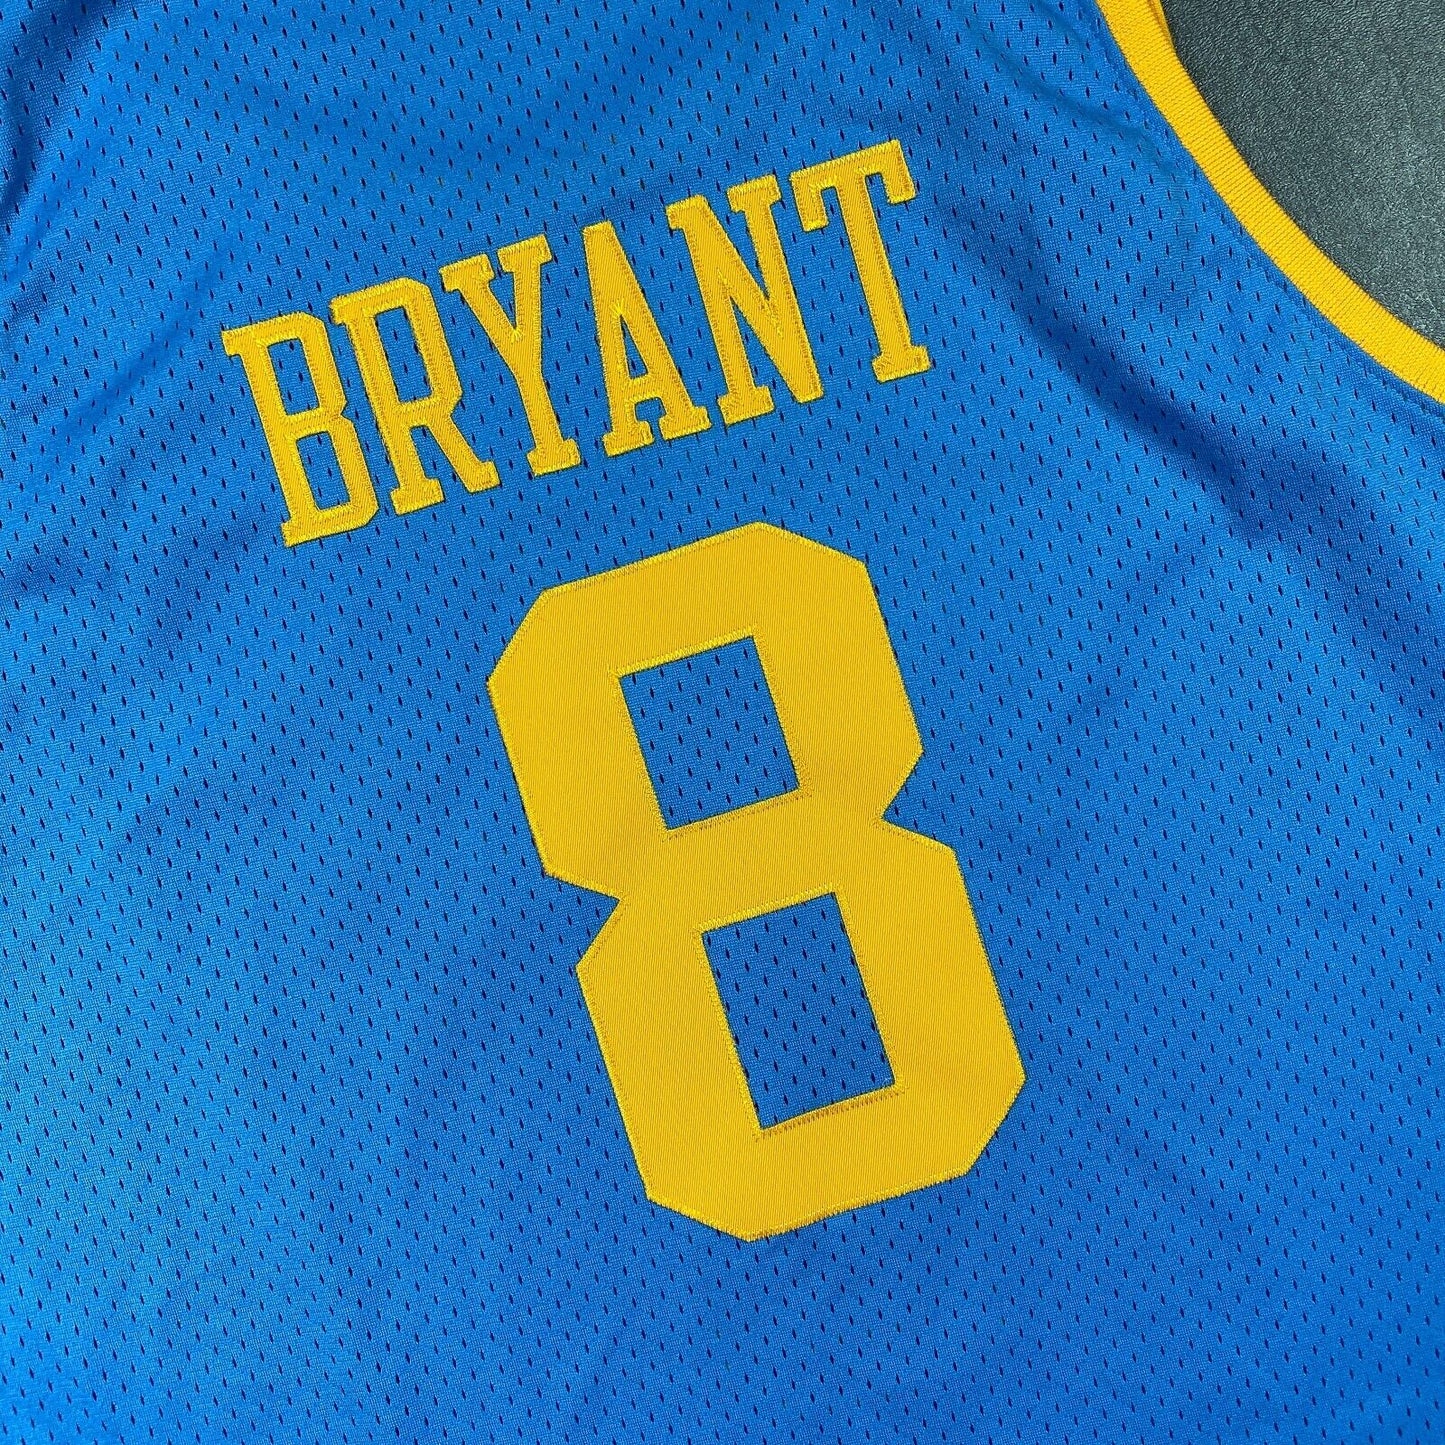 100% Authentic Kobe Bryant Vintage Nike Lakers HWC Nights Jersey Size XL Mens